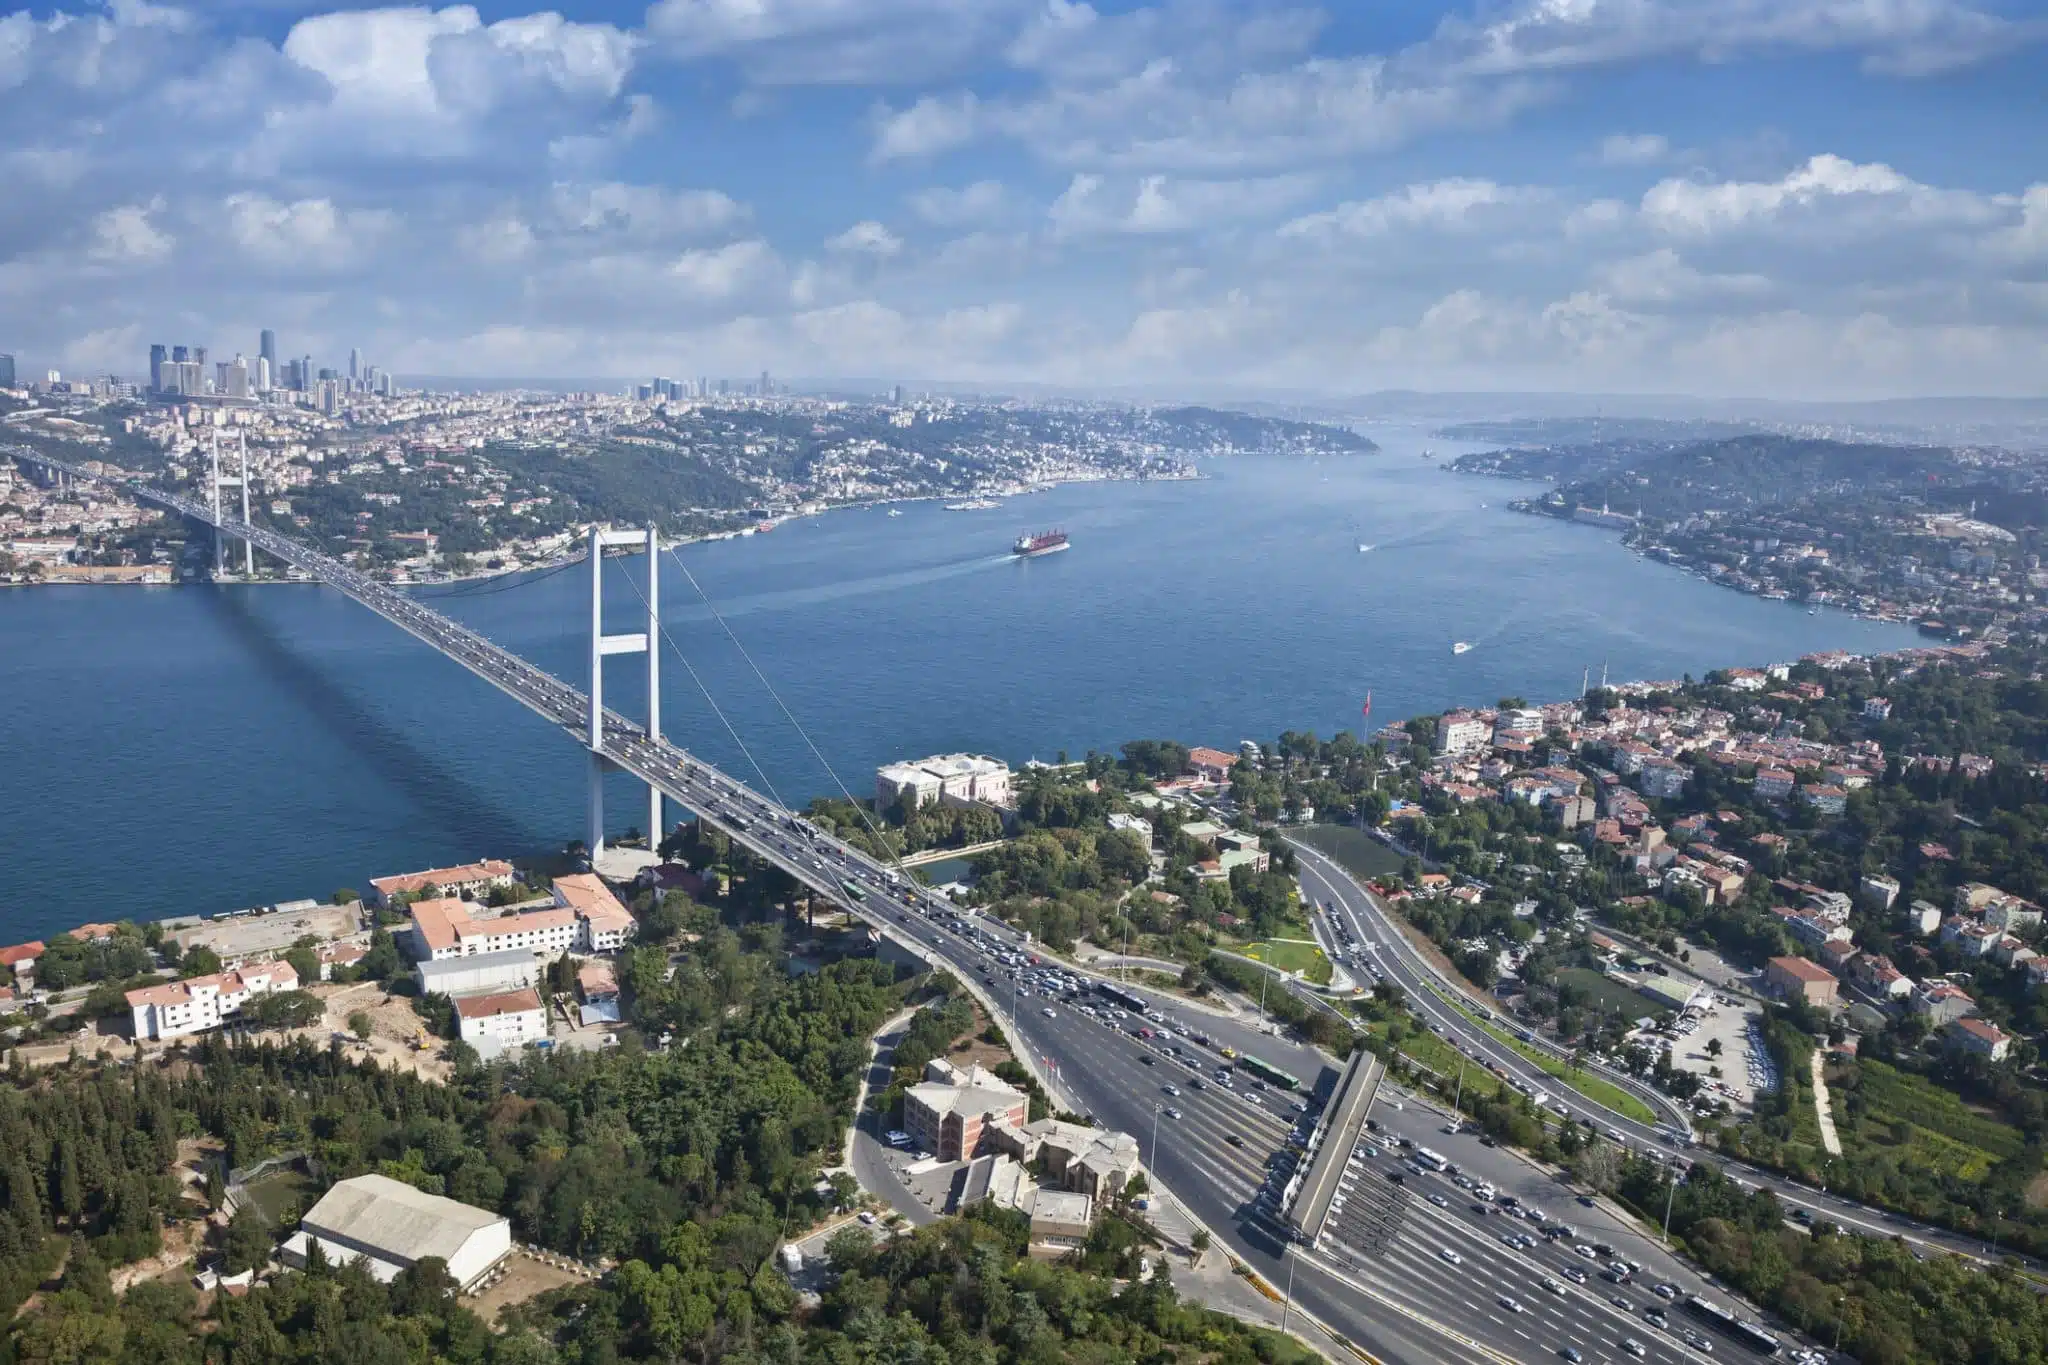 bosphorus bridge along Bosphorus strait